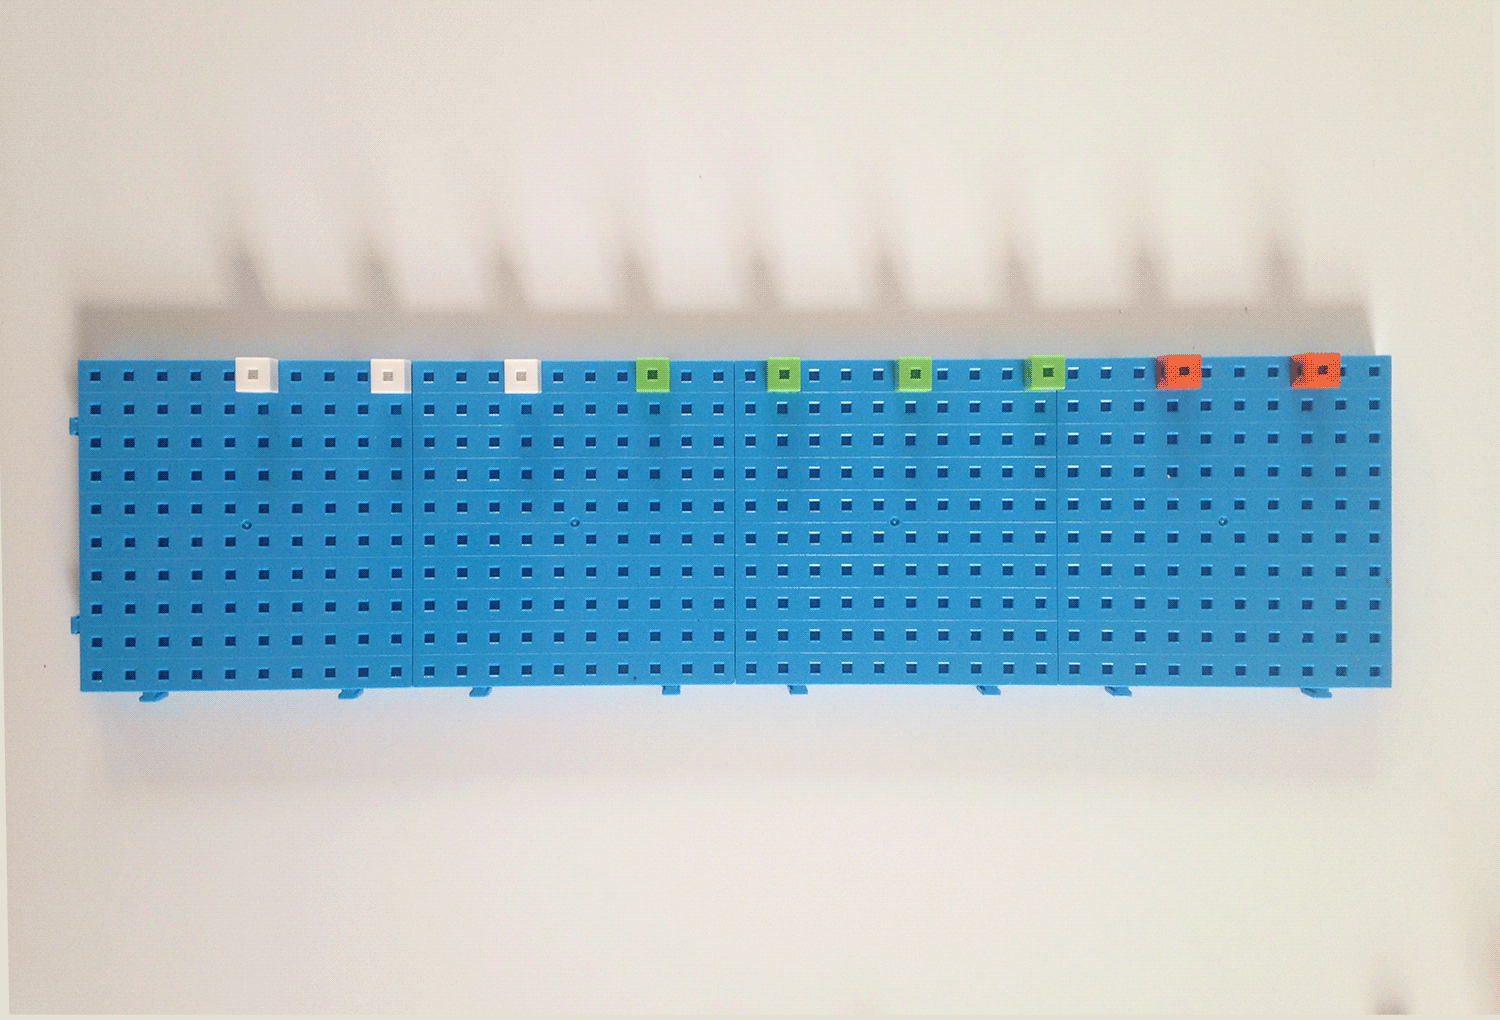 workflow prototype in blocks